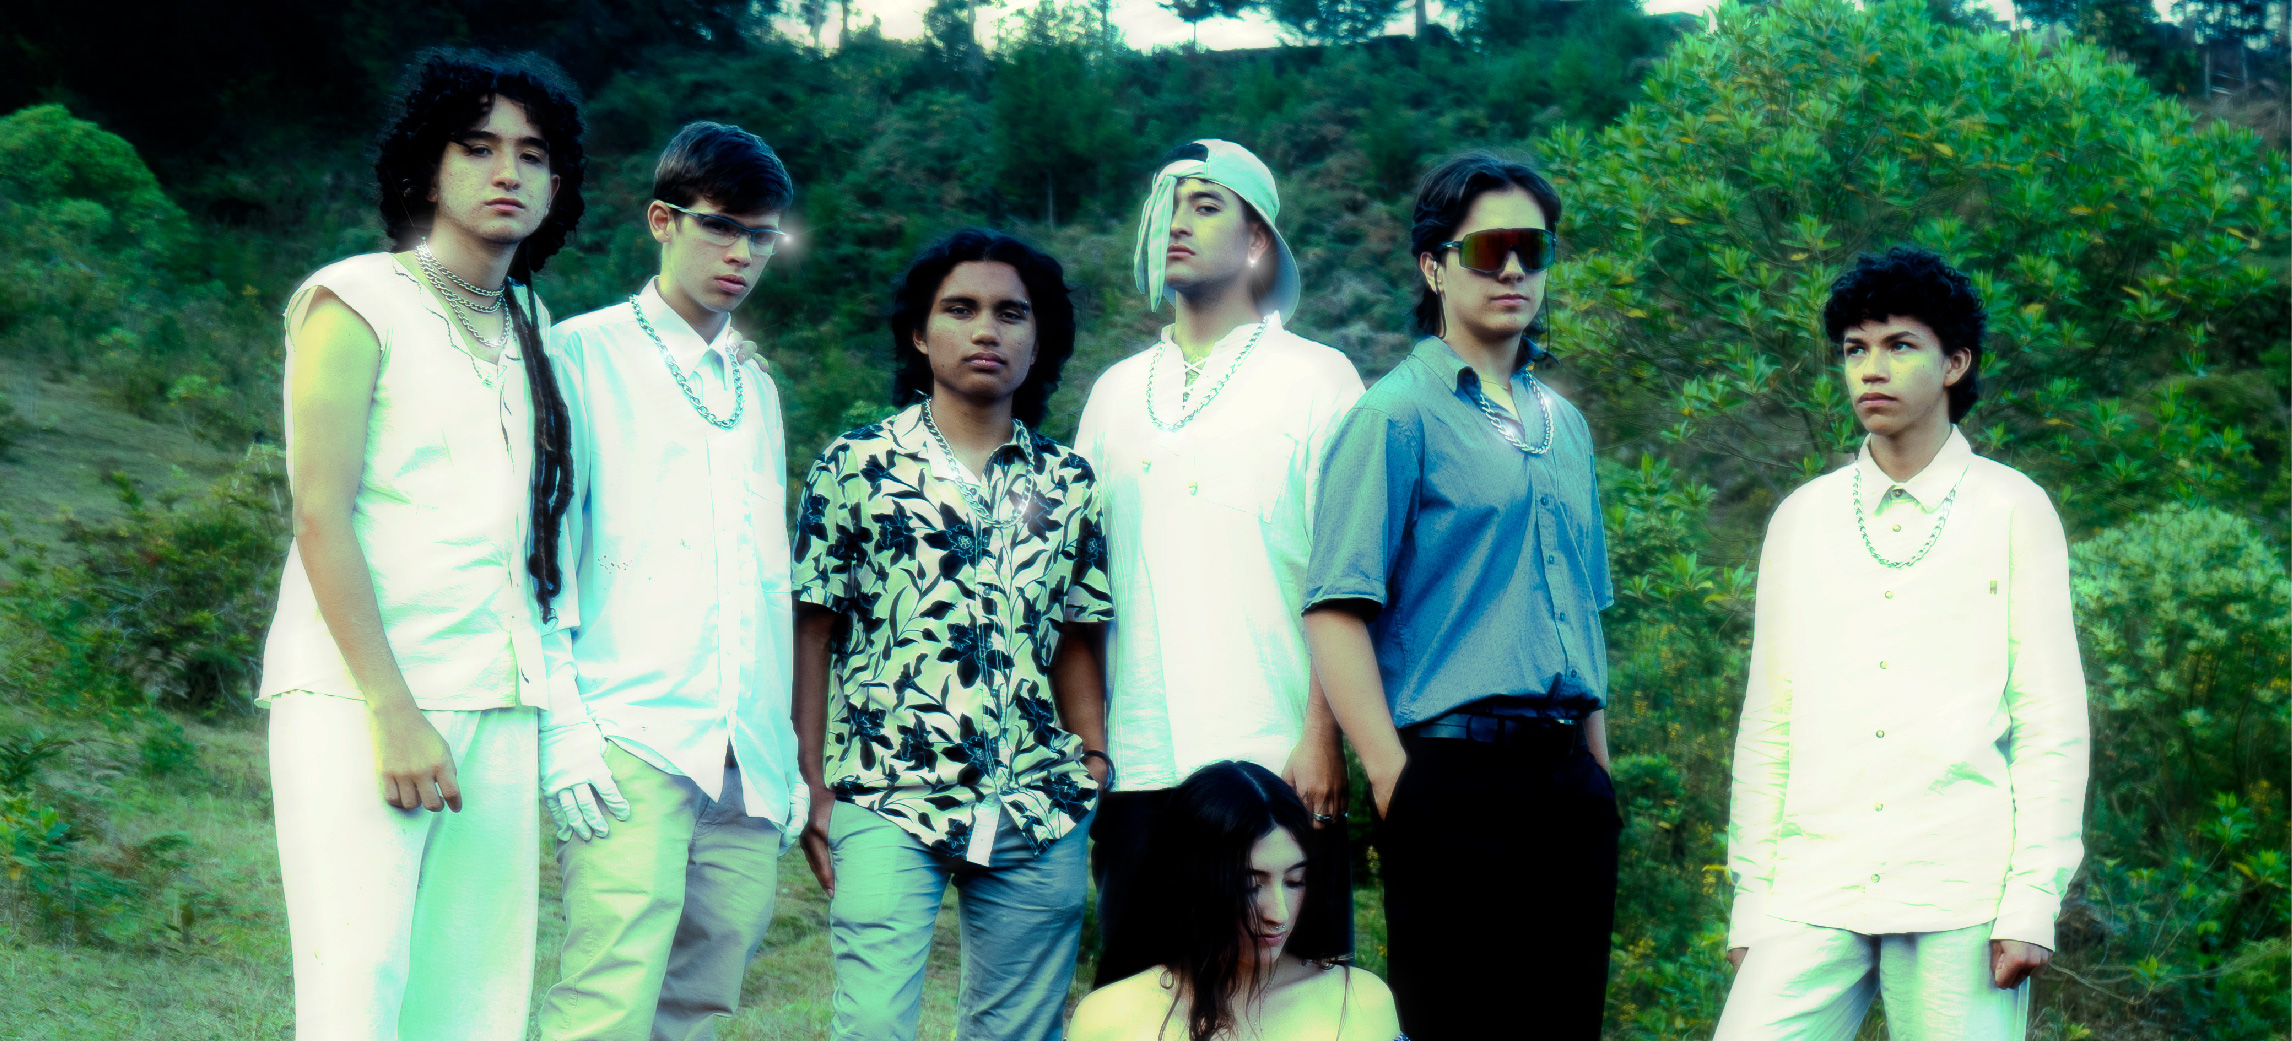 Trifásica, la banda promesa de Rionegro, lanza su quinto sencillo "Sertralina"